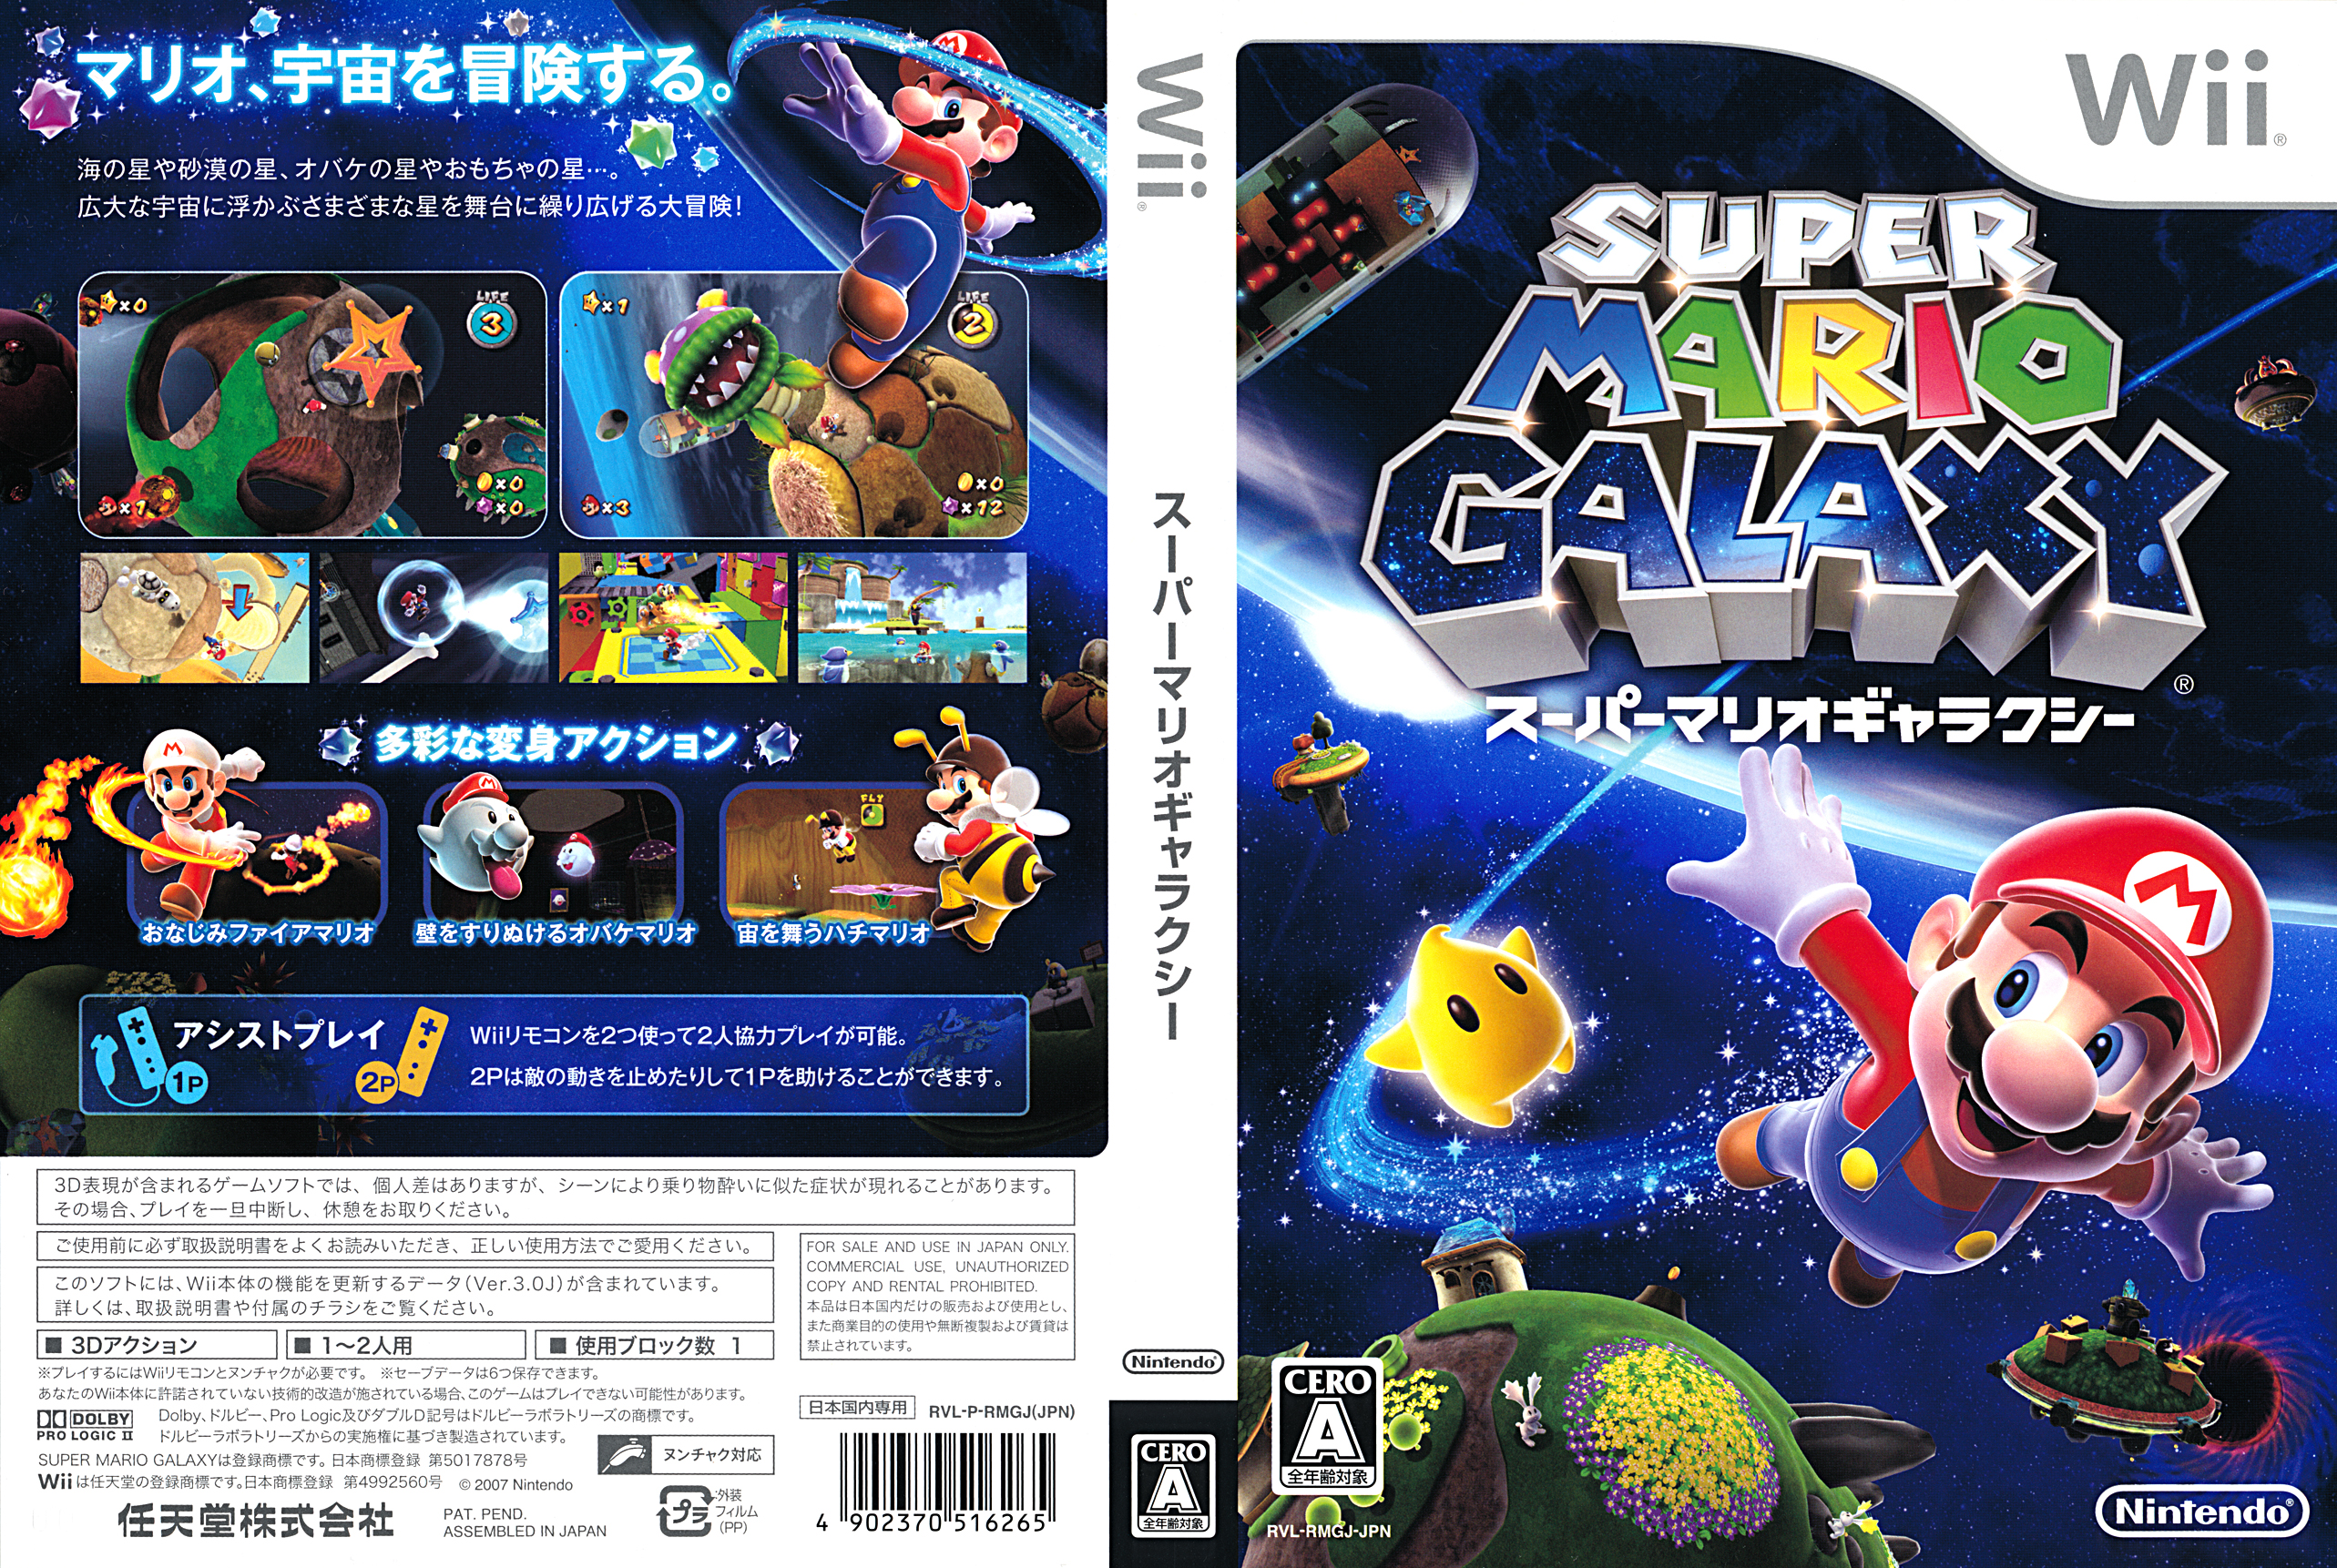 Mario galaxy wii. Super Mario Galaxy 2 Wii. Super Mario Galaxy Wii Cover. Super Mario Galaxy (Rus) Wii обложка. . Super Mario Galaxy platform: Wii.